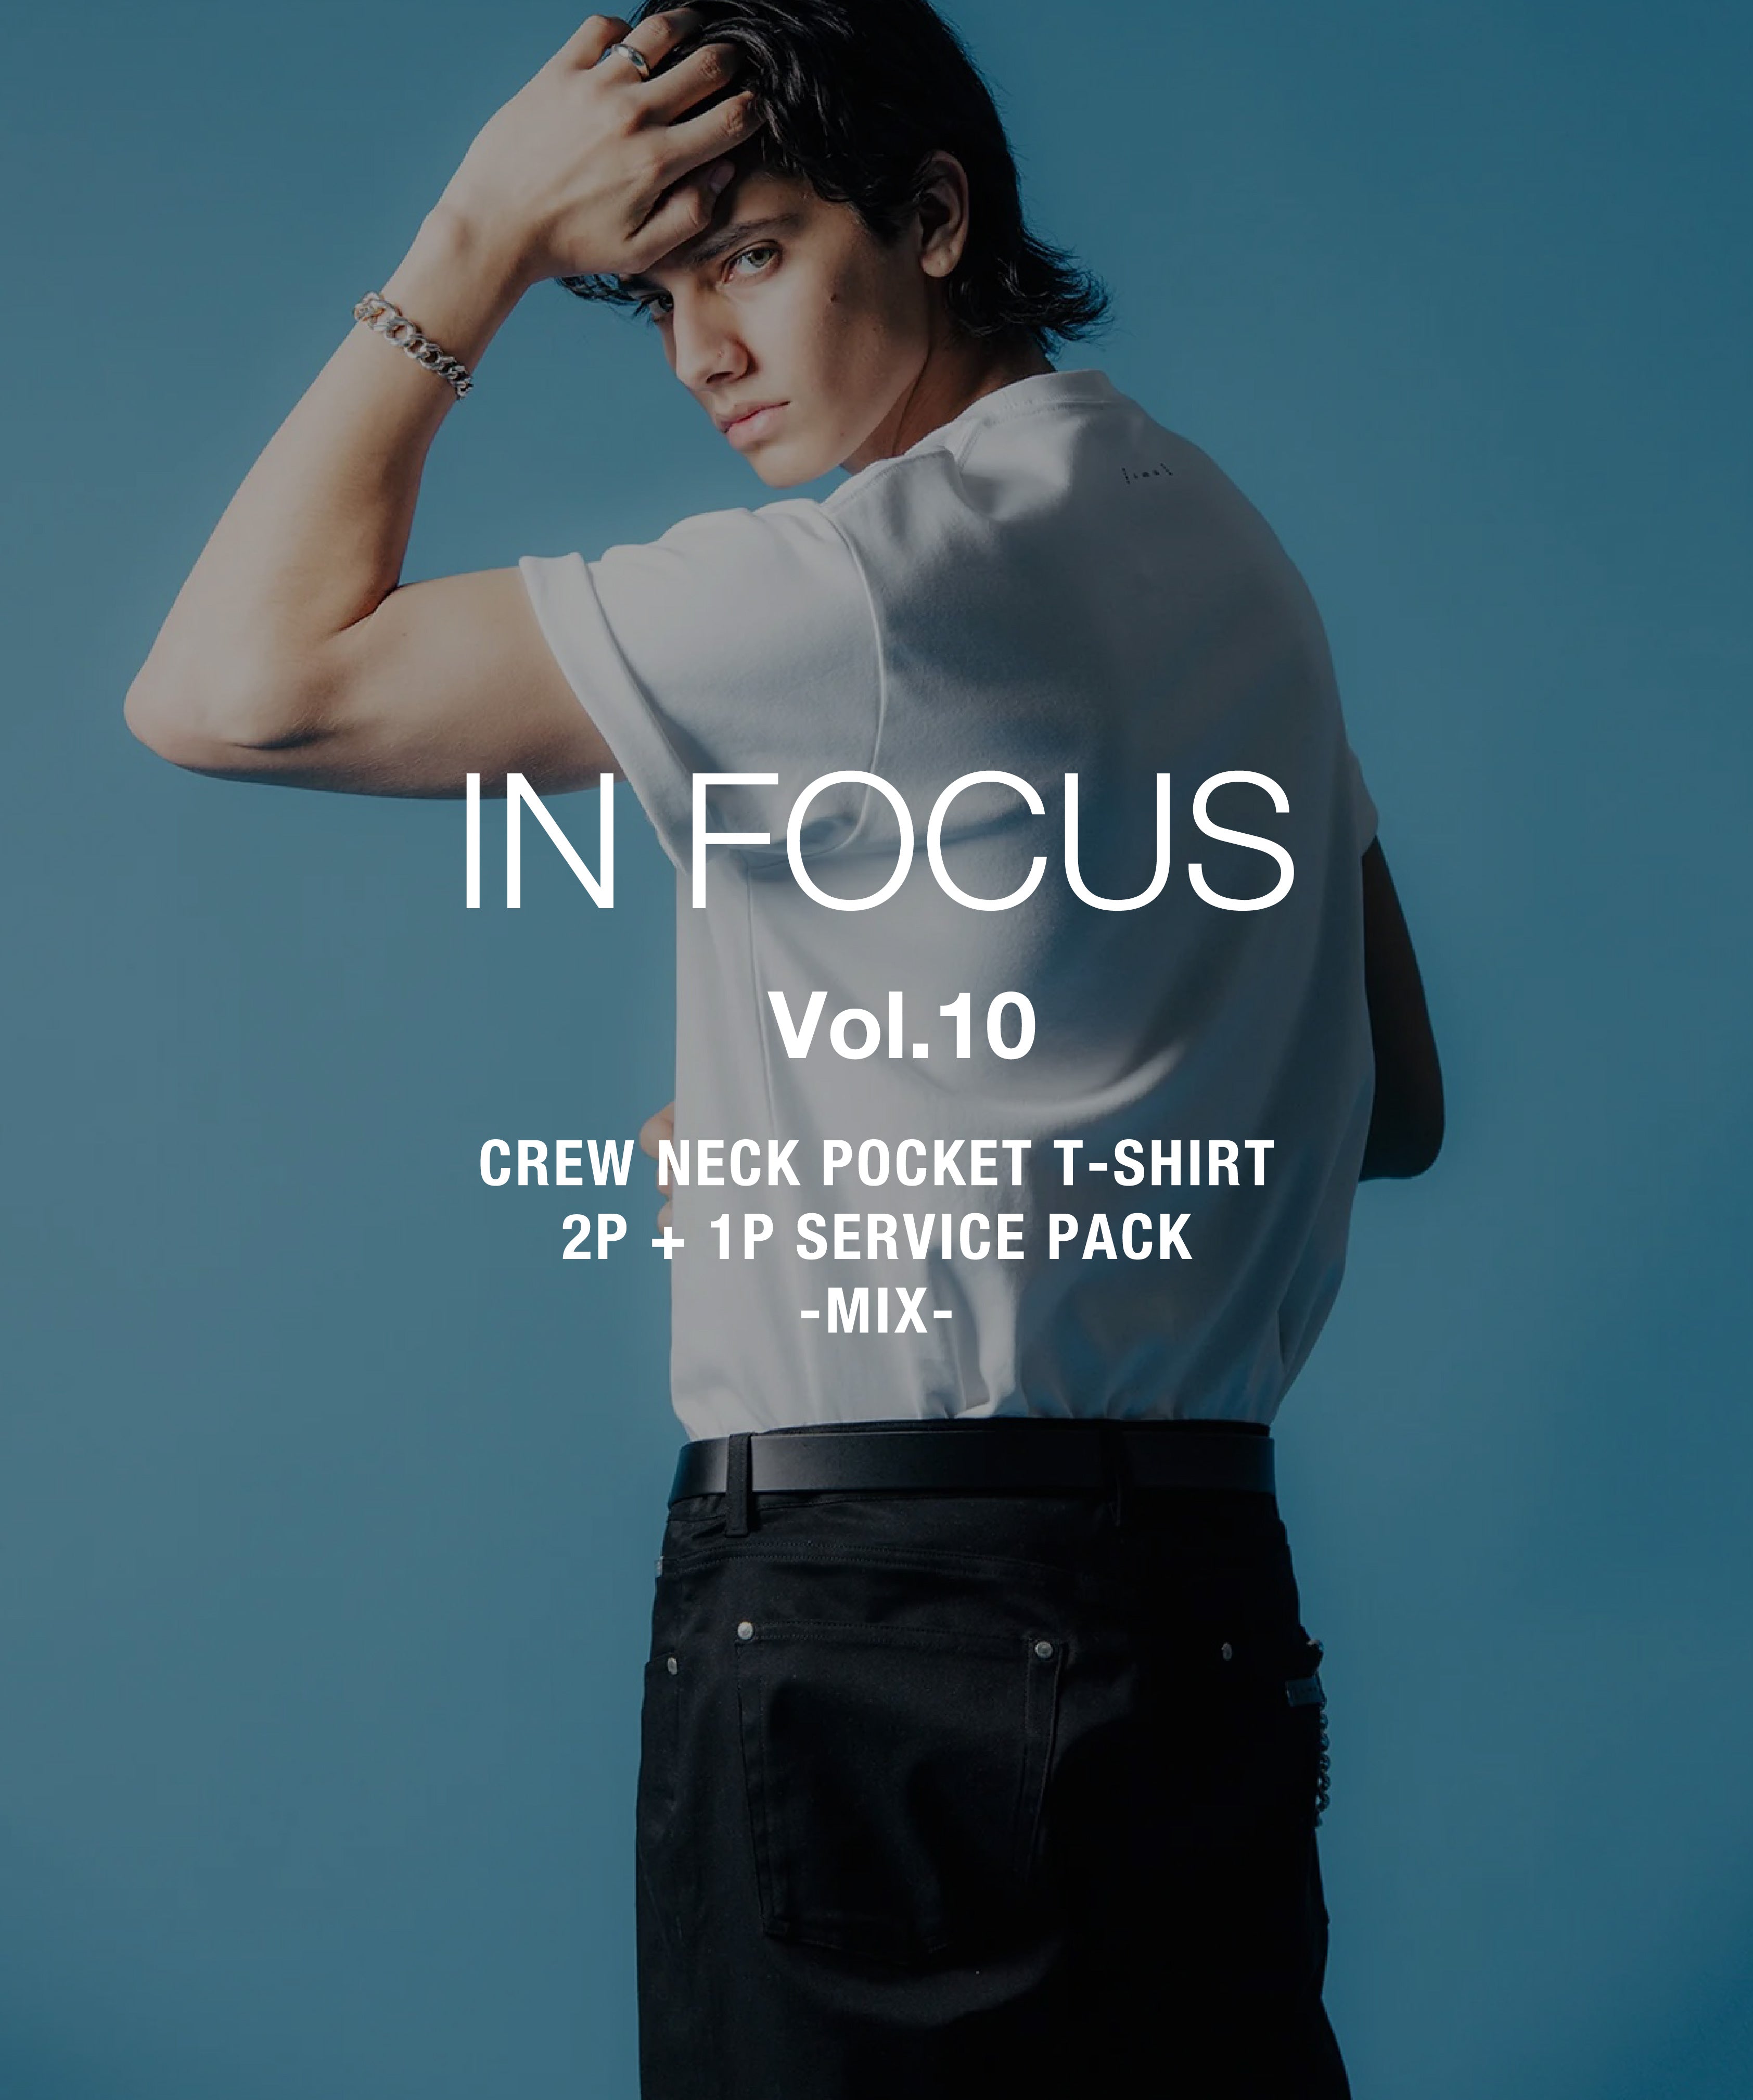 IN FOCUS Vol.10 CREW NECK POCKET T-SHIRT 2P + 1P SERVICE PACK - MIX